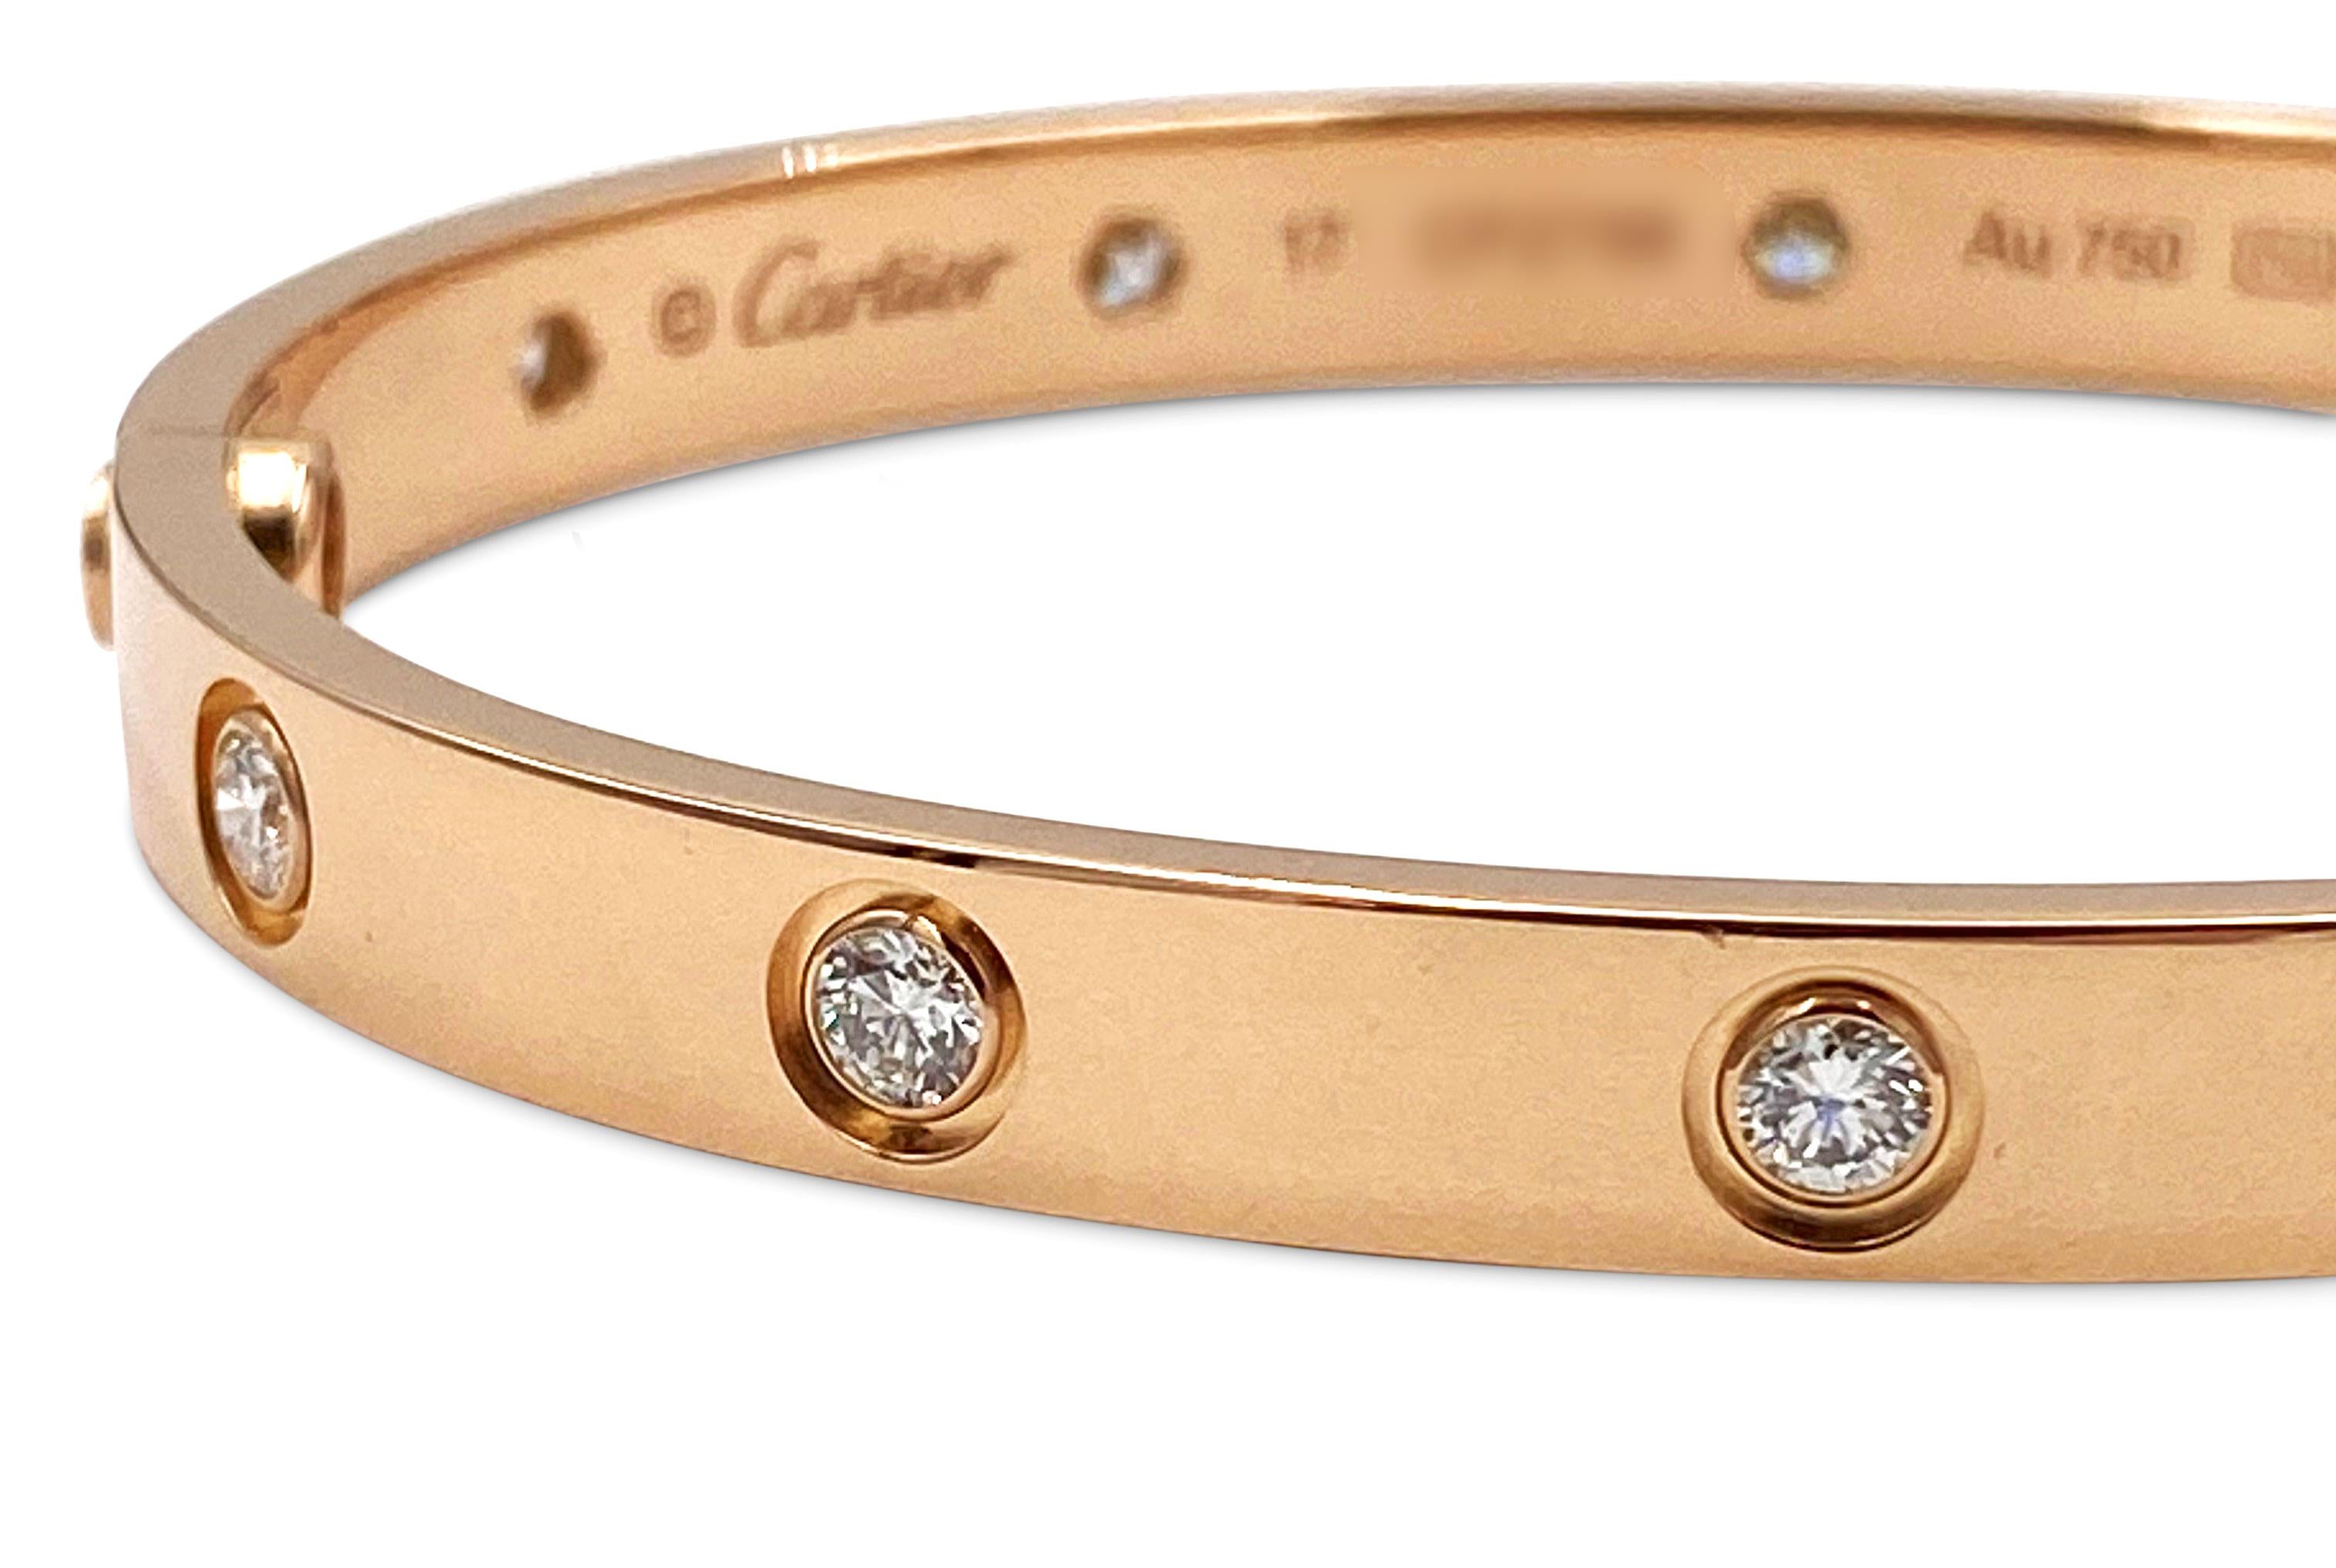 cartier love bracelet rainbow diamonds